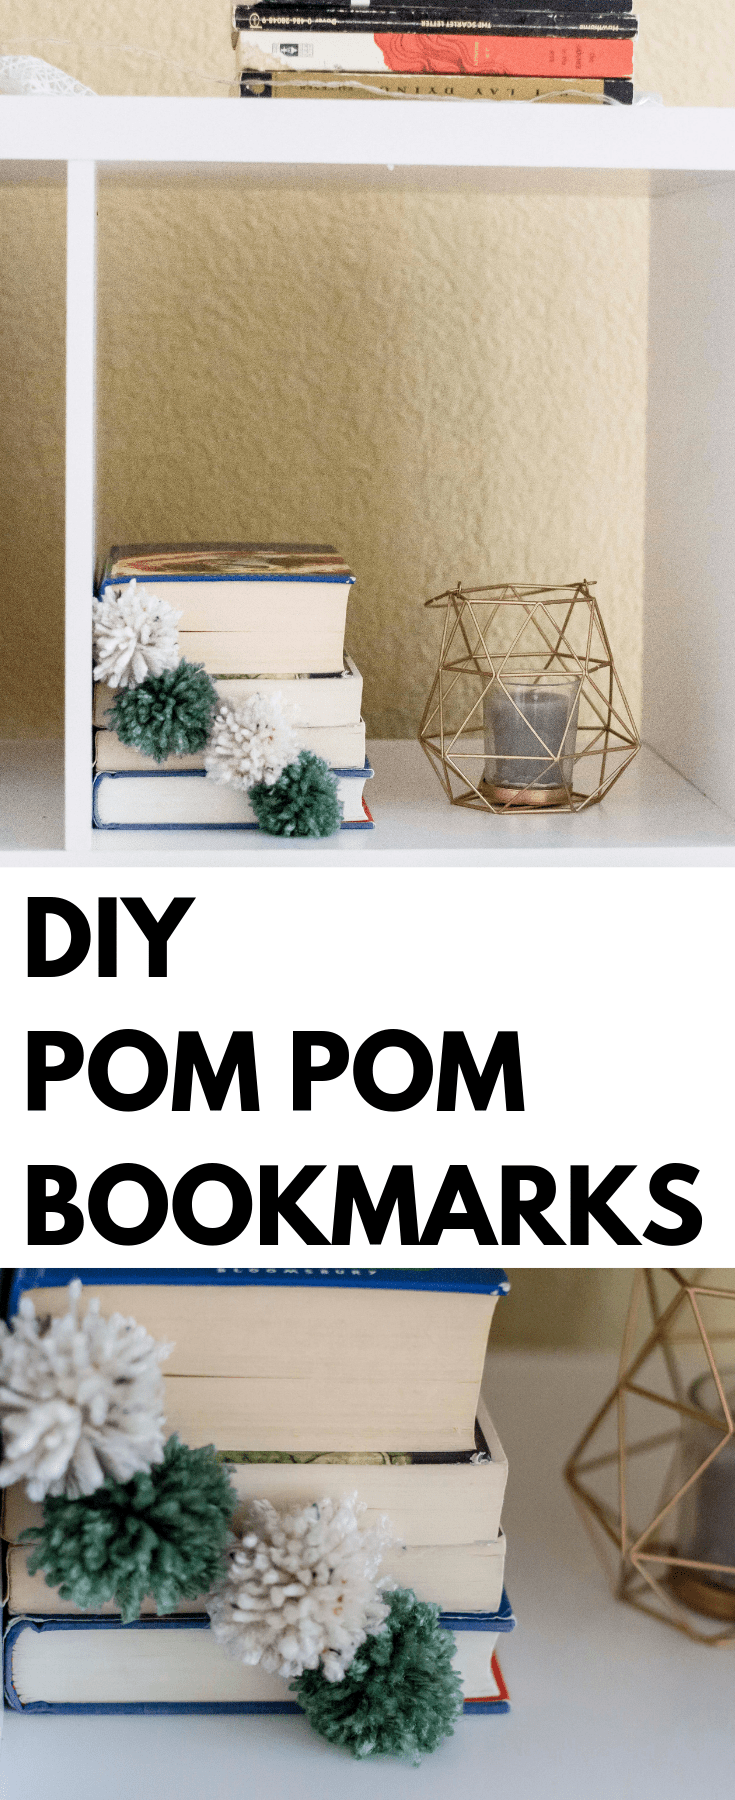 DIY: Pom Pom Bookmarks